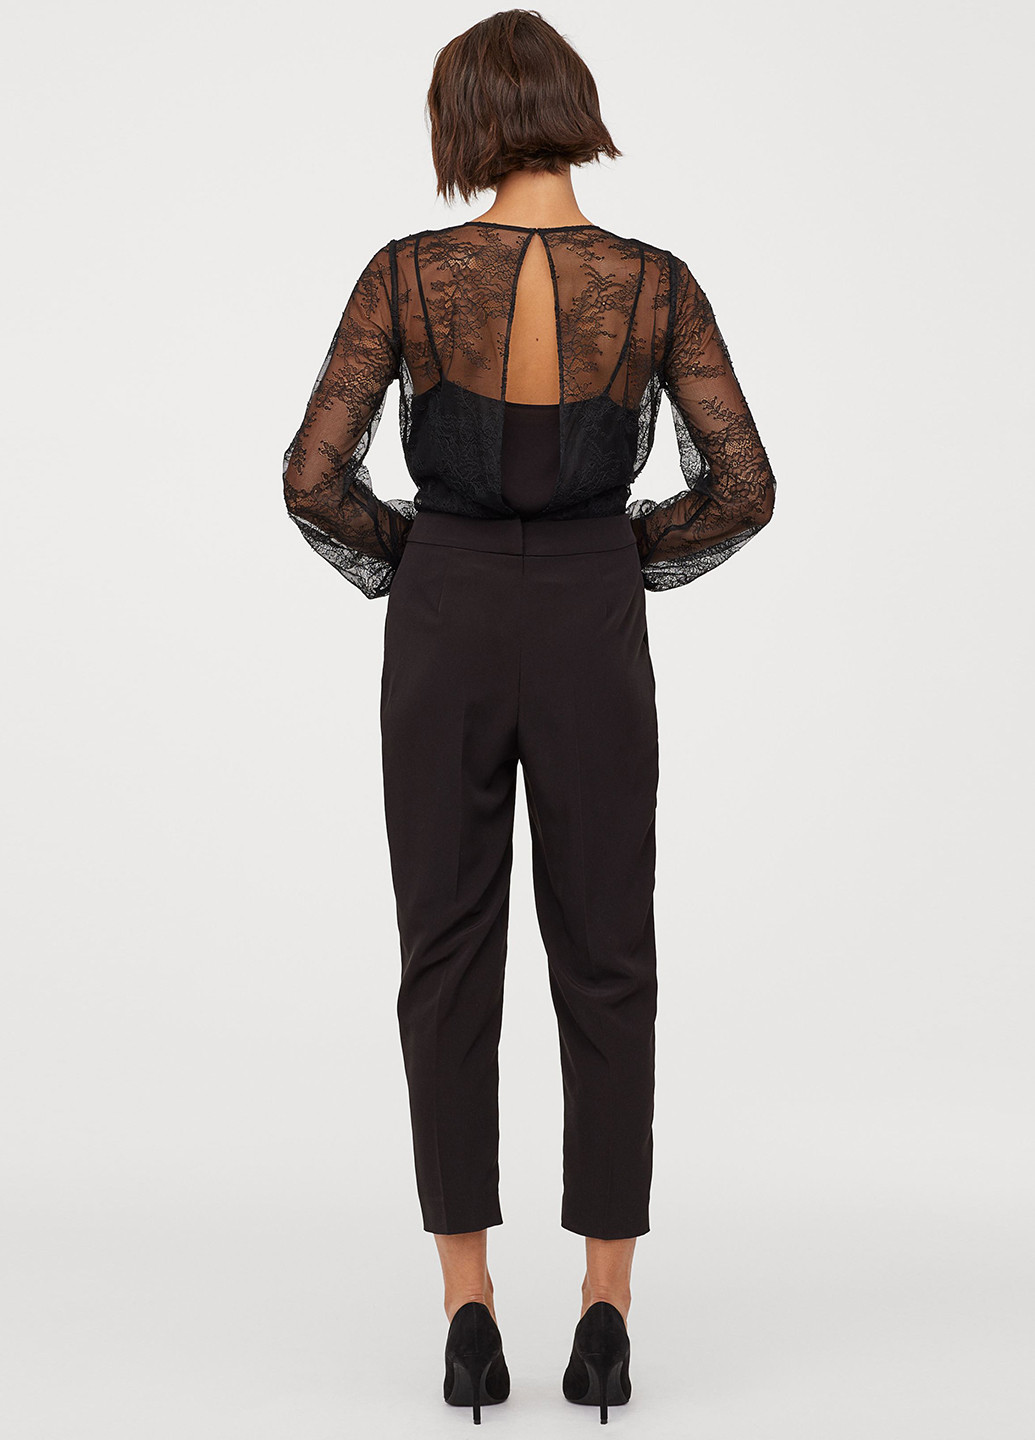 Комбинезон H&M комбинезон-брюки чёрный кэжуал полиэстер